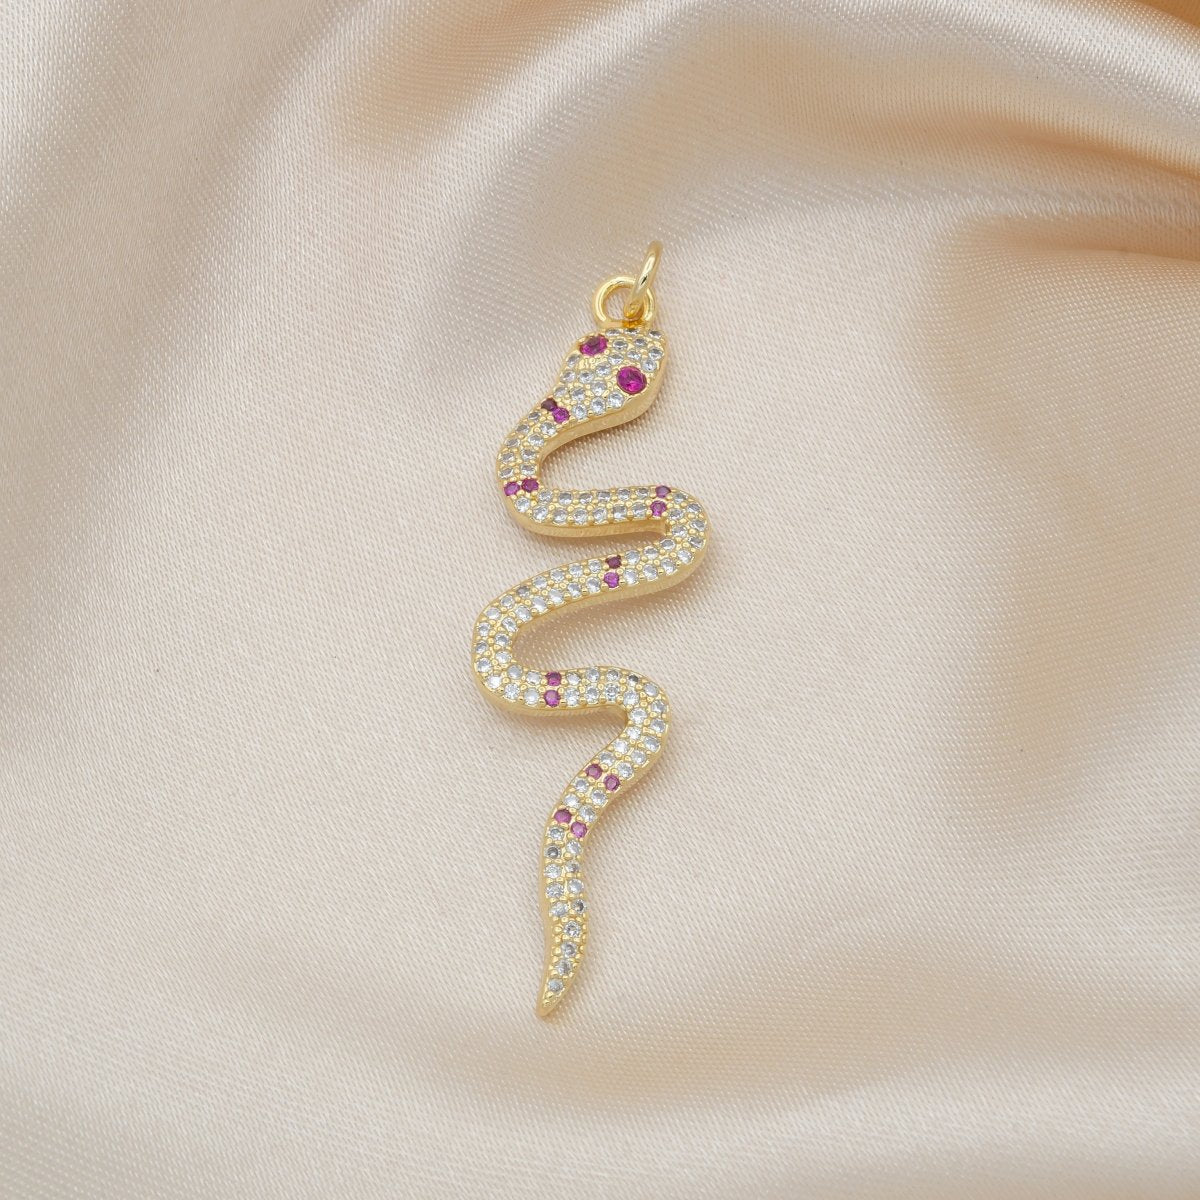 Tiny Purple Crystal Golden Baby Snake Worm CZ Reptile Animal Nature Micro Pave Charm Pendant GP-501 - DLUXCA